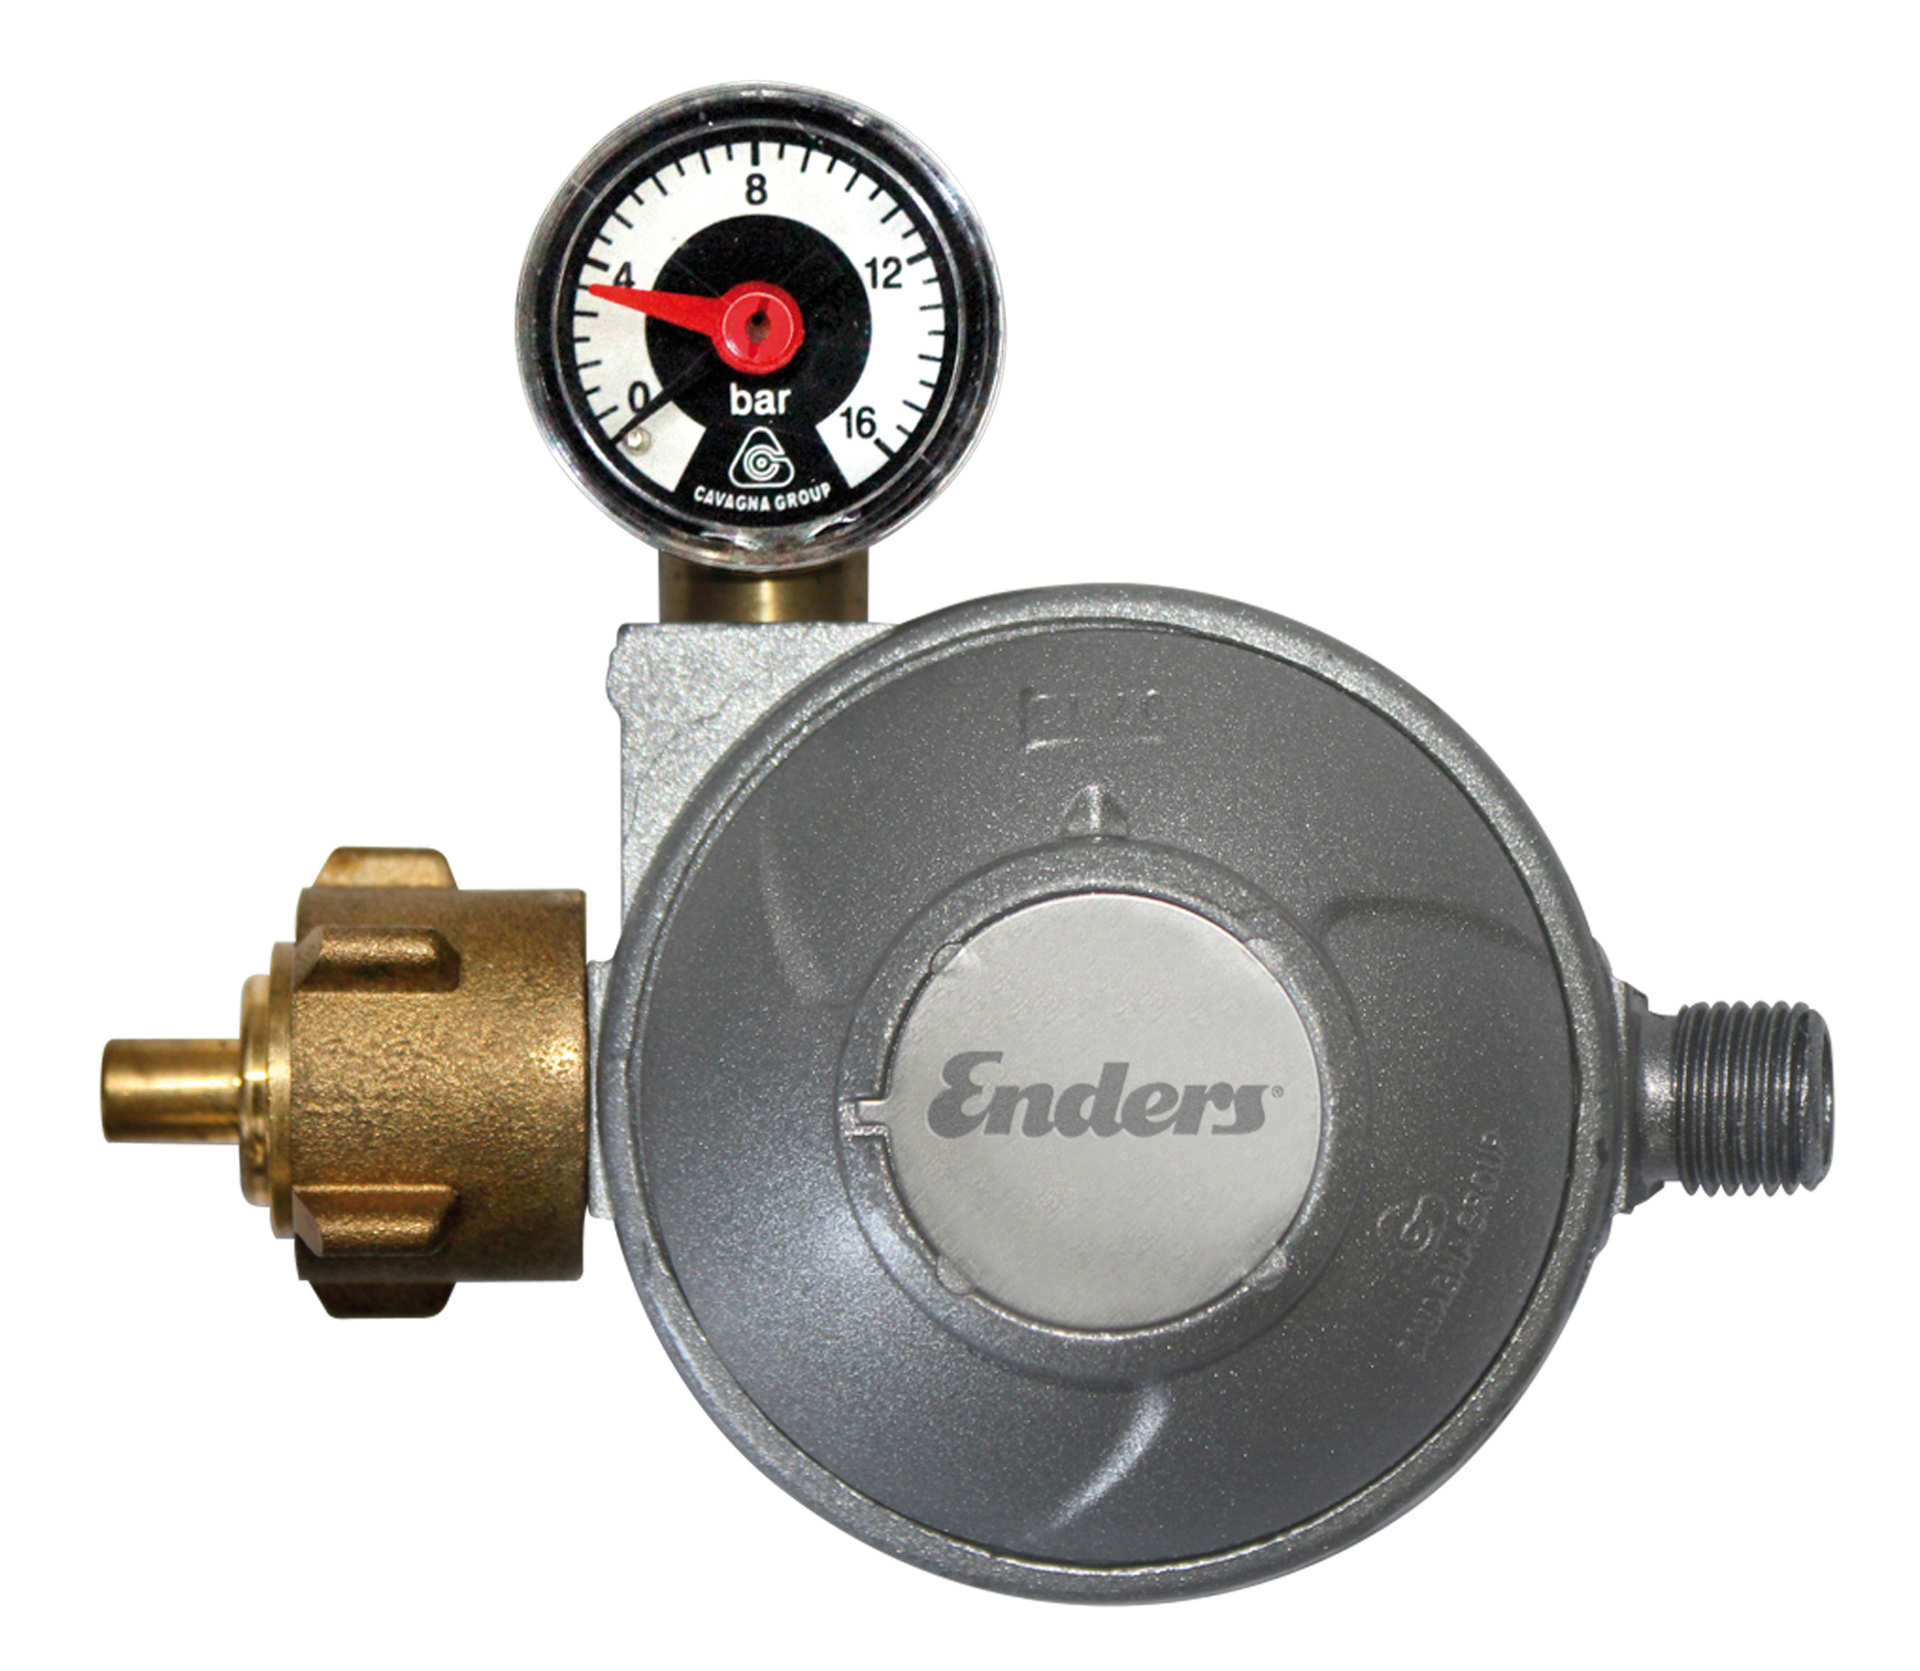 Gasdruckregler mit Manometer